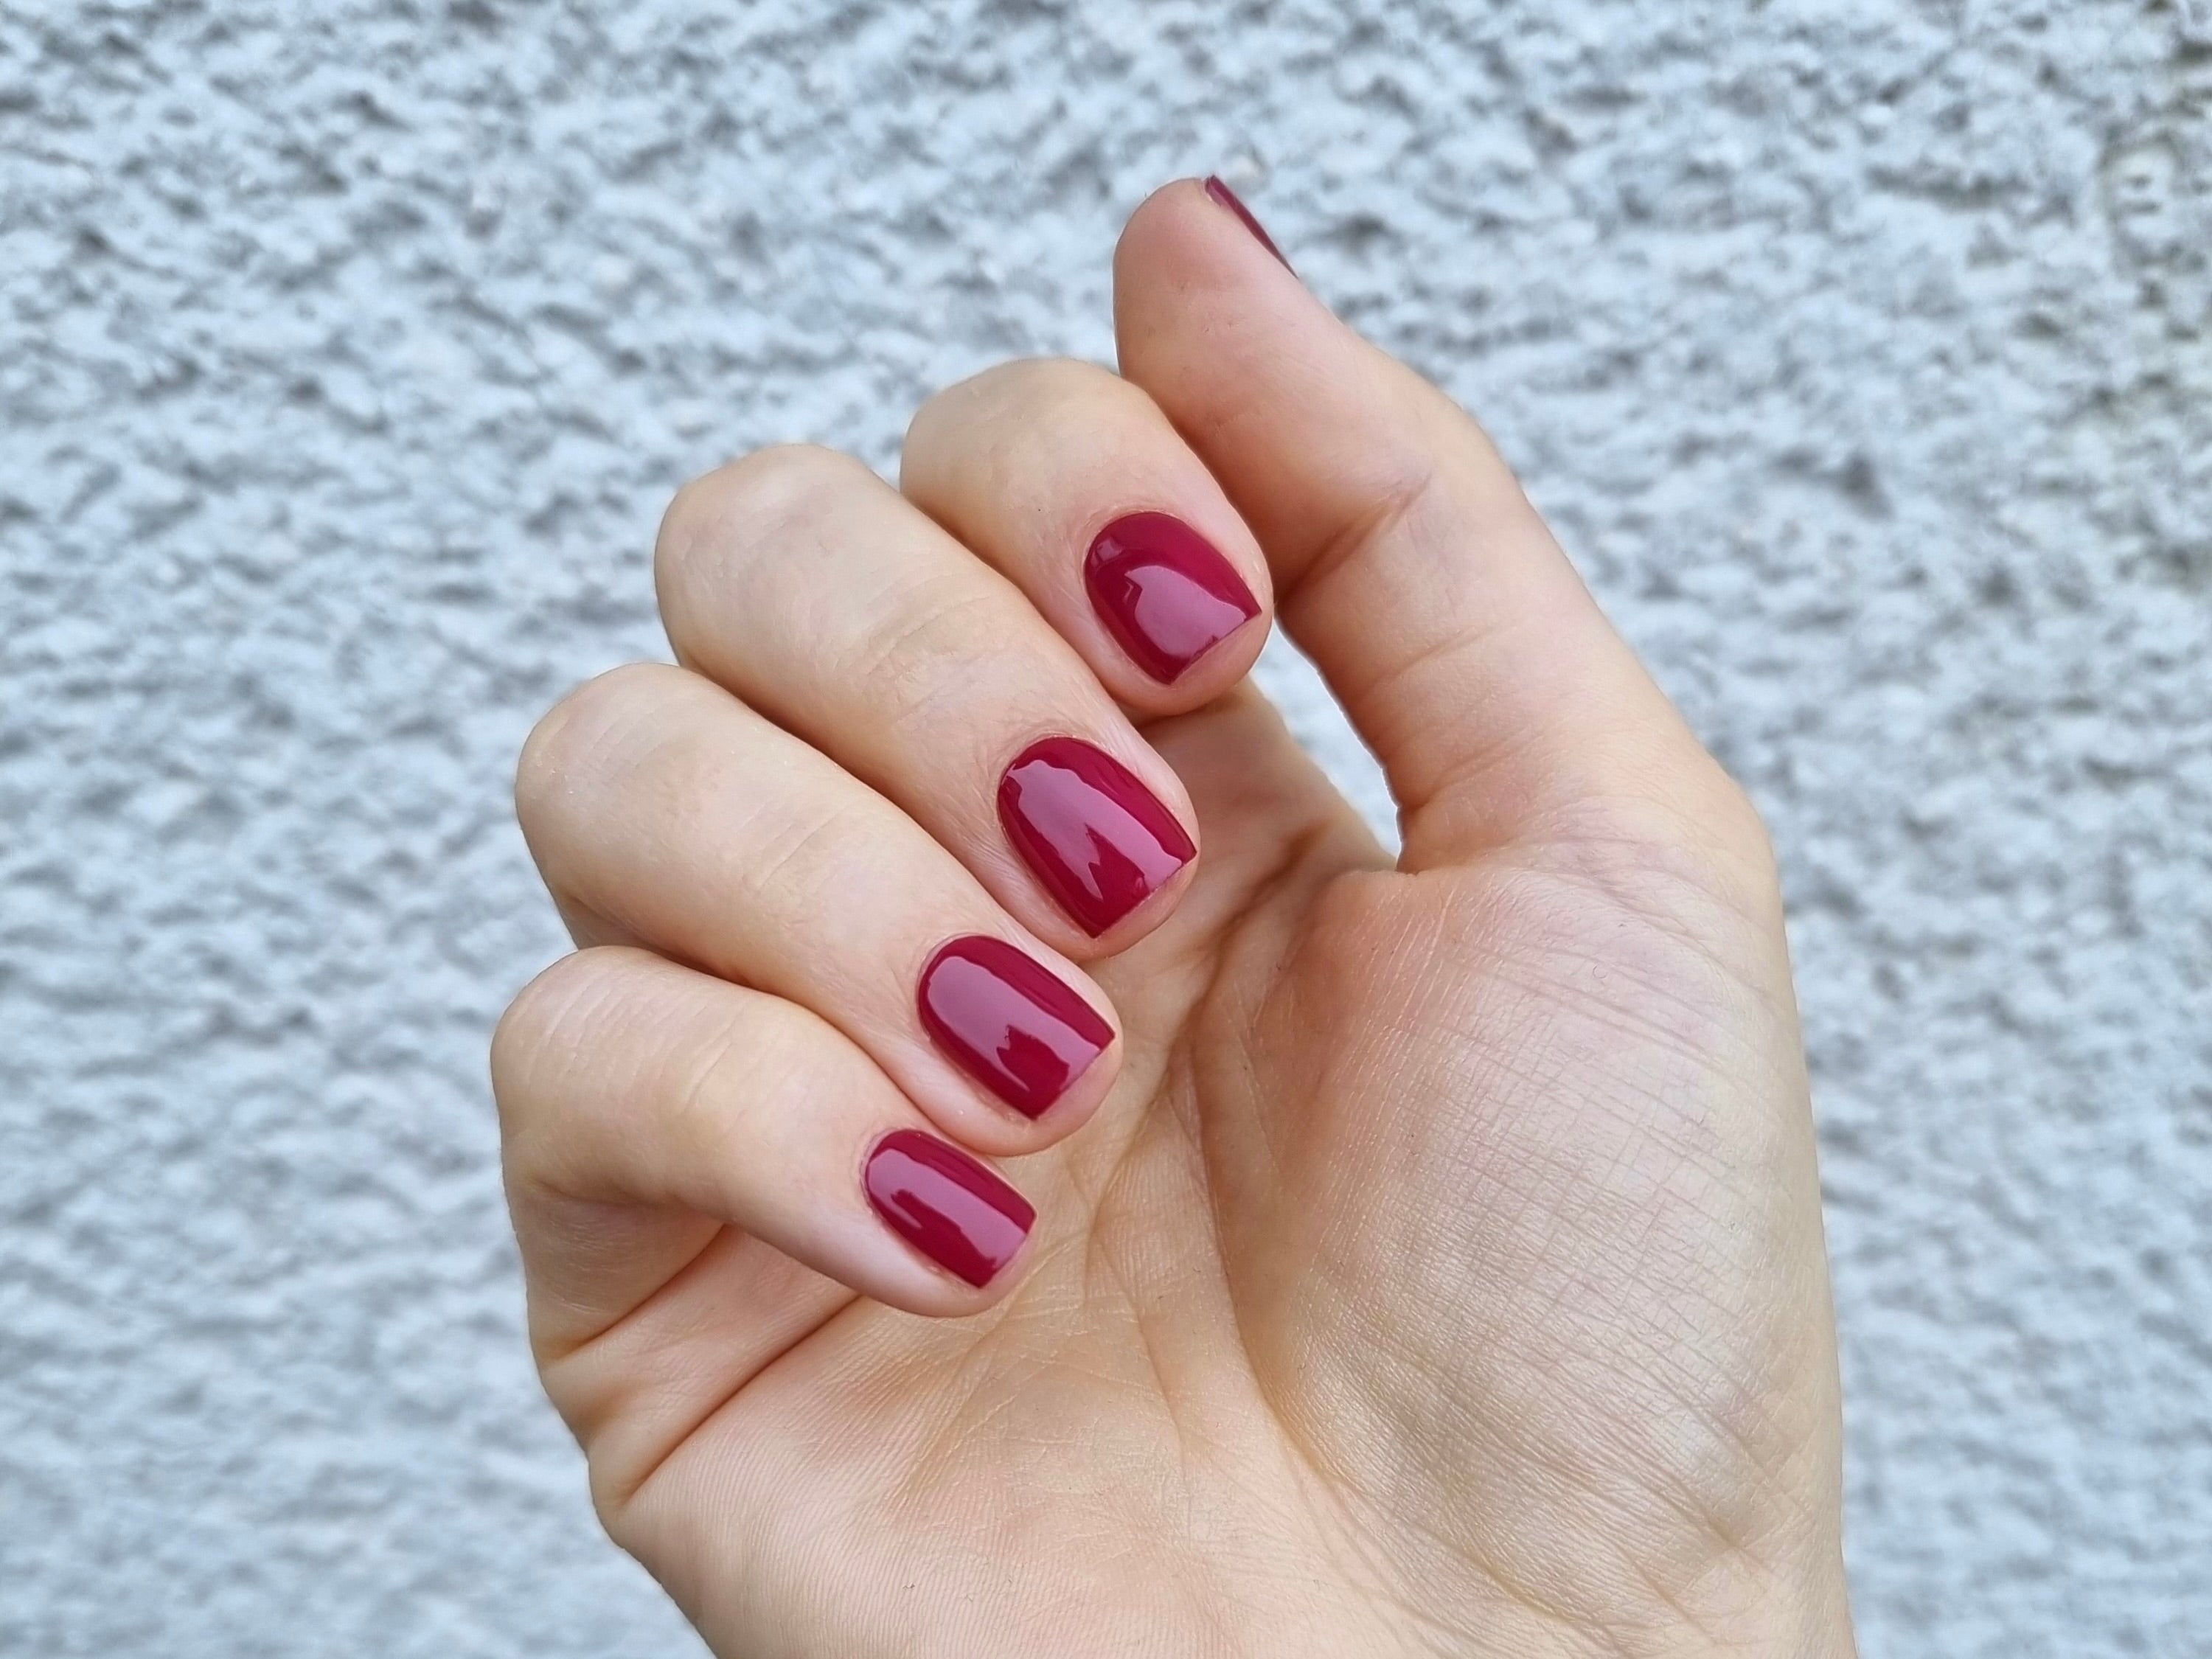 Rita Red Maniac nails gellak stickers Manicure Solid red